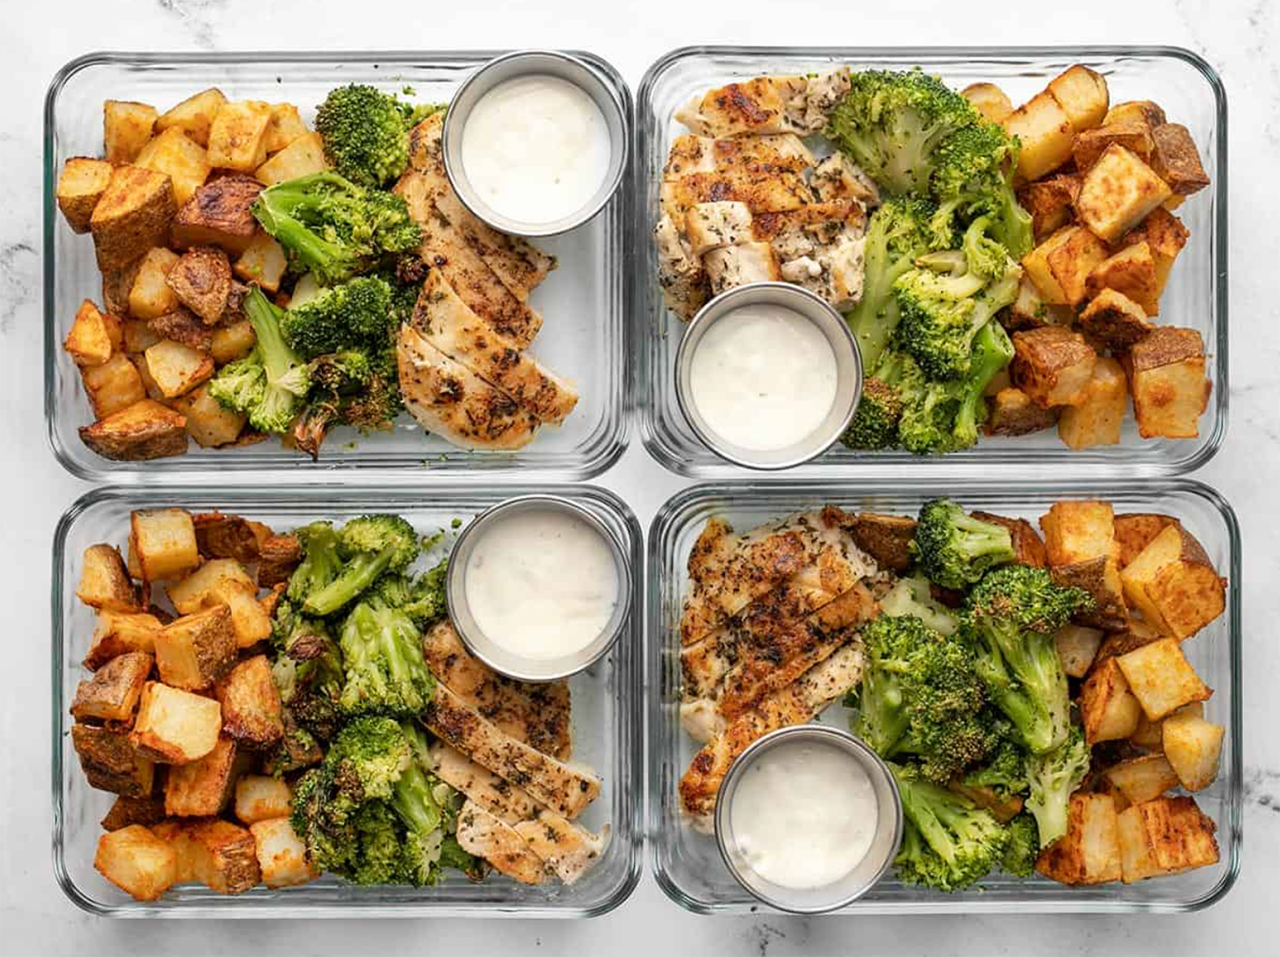 NZ-Based Chicken, Potato, and Broccoli Meal Prep